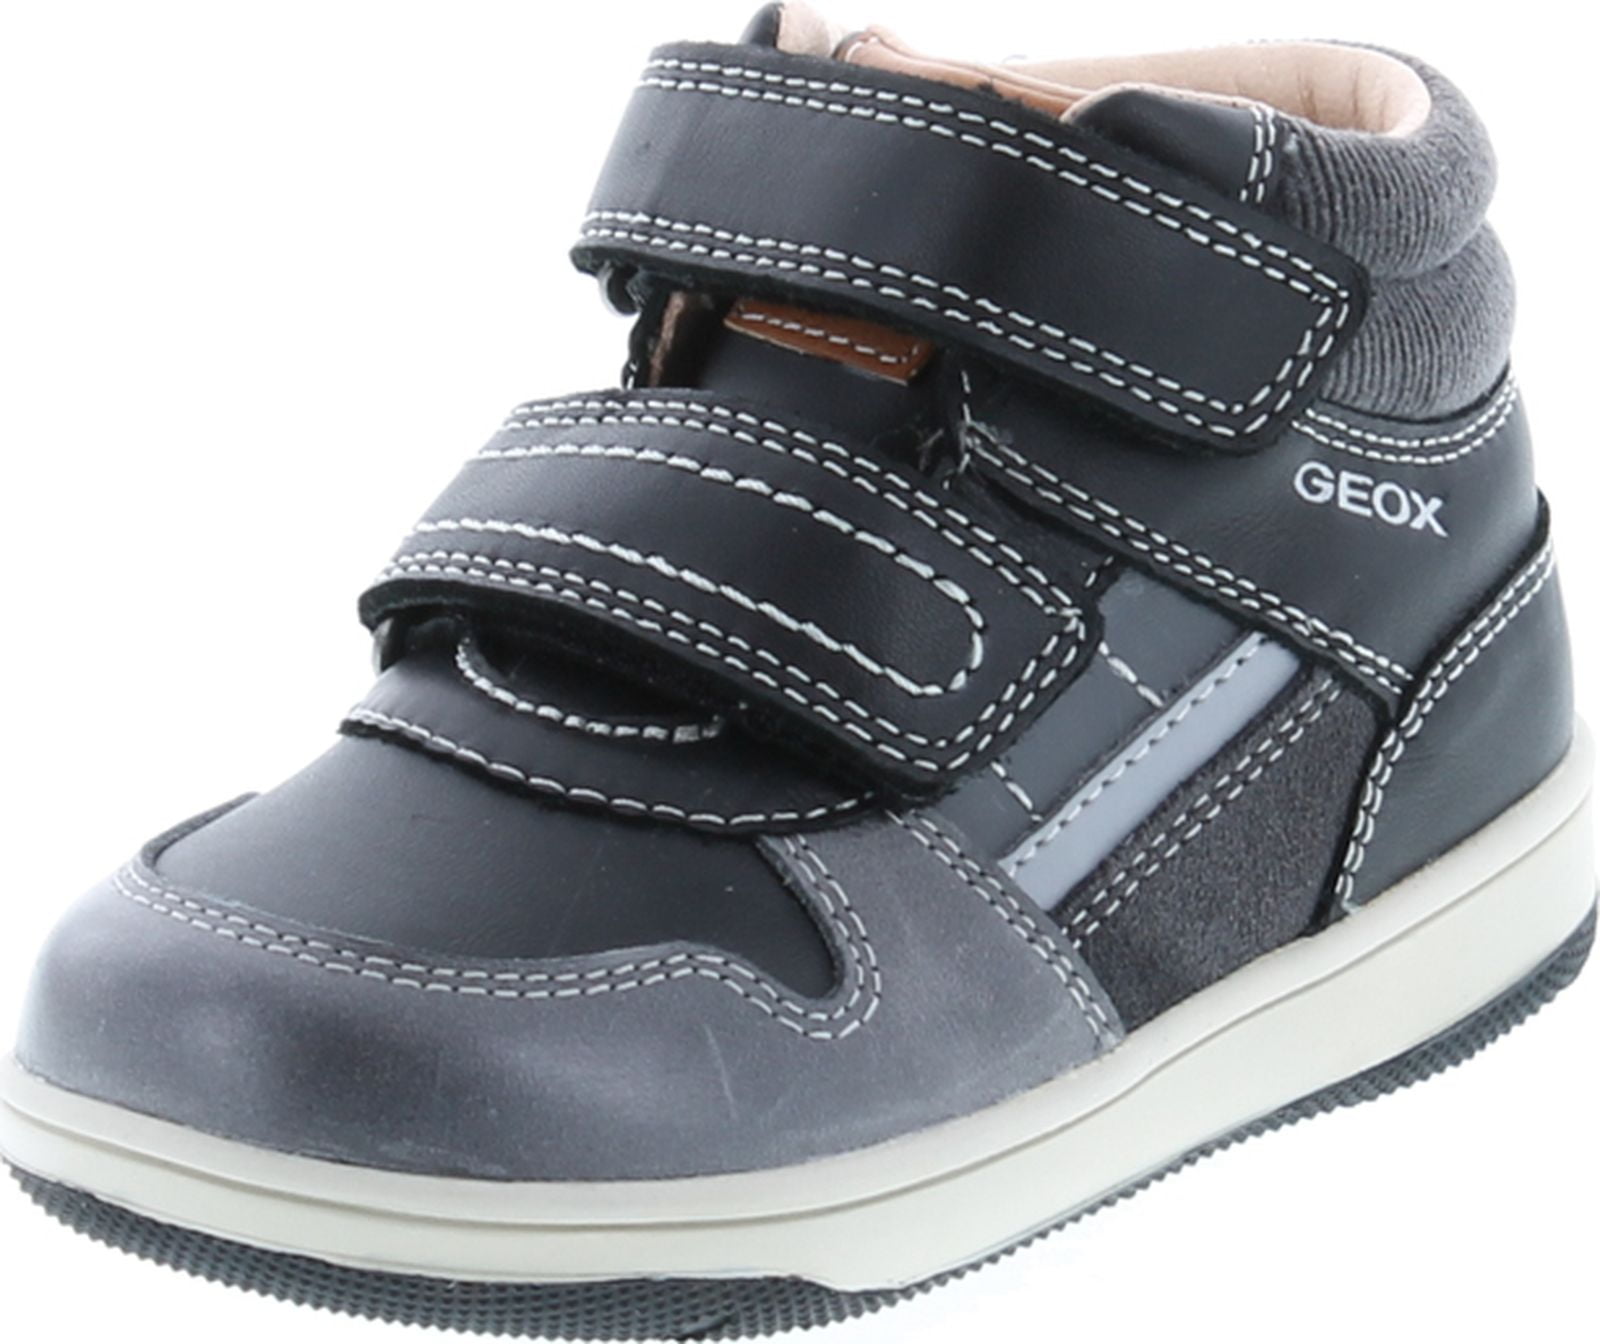 Geox Boys Baby Flick Fashion Shoes, Black/Dark 22 - Walmart.com